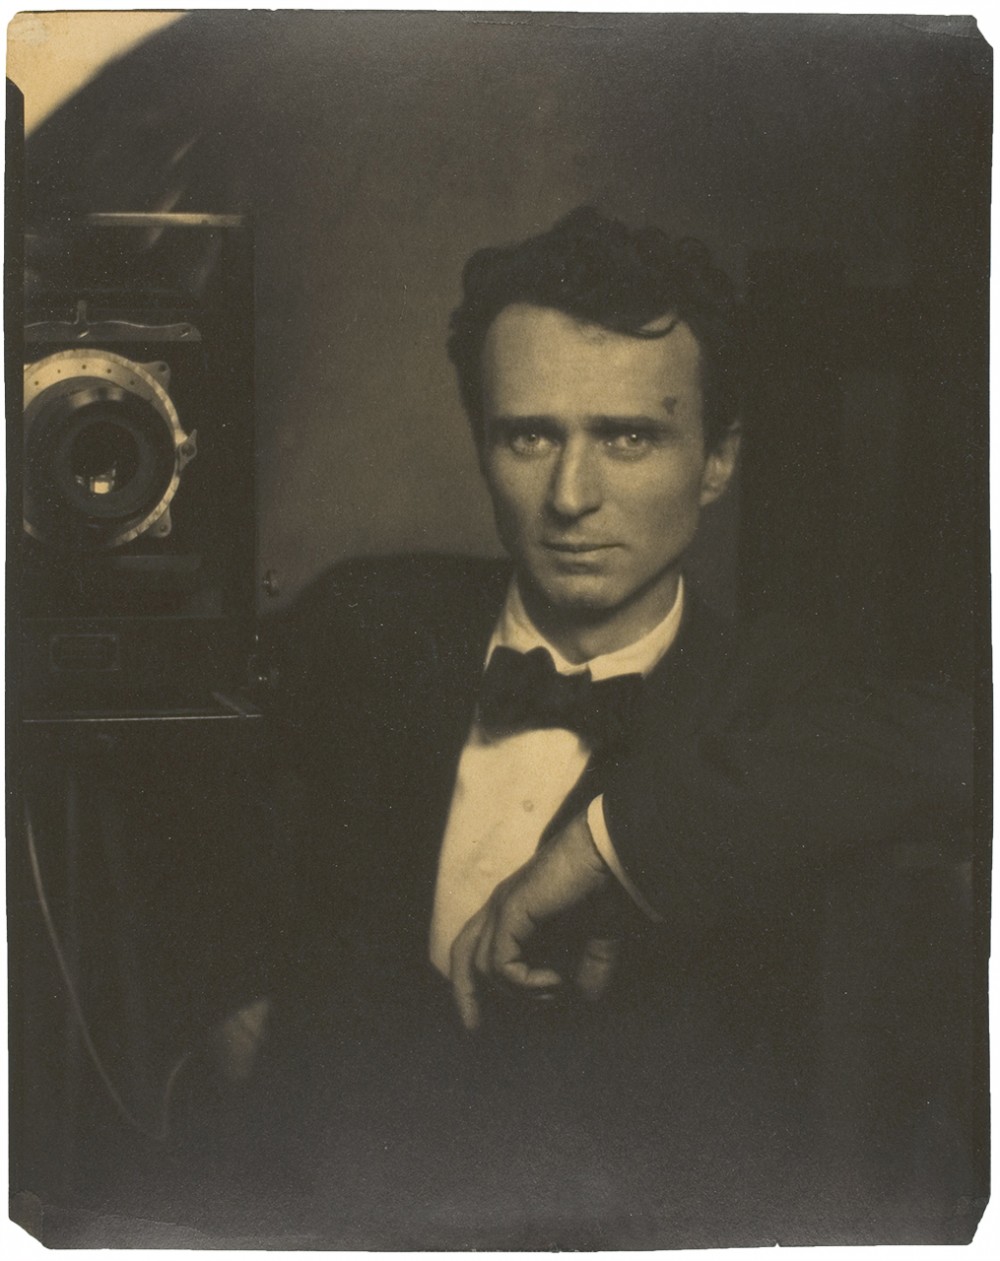 Figure 2. Edward J. Steichen. Self-Portrait with Camera, c. 1917